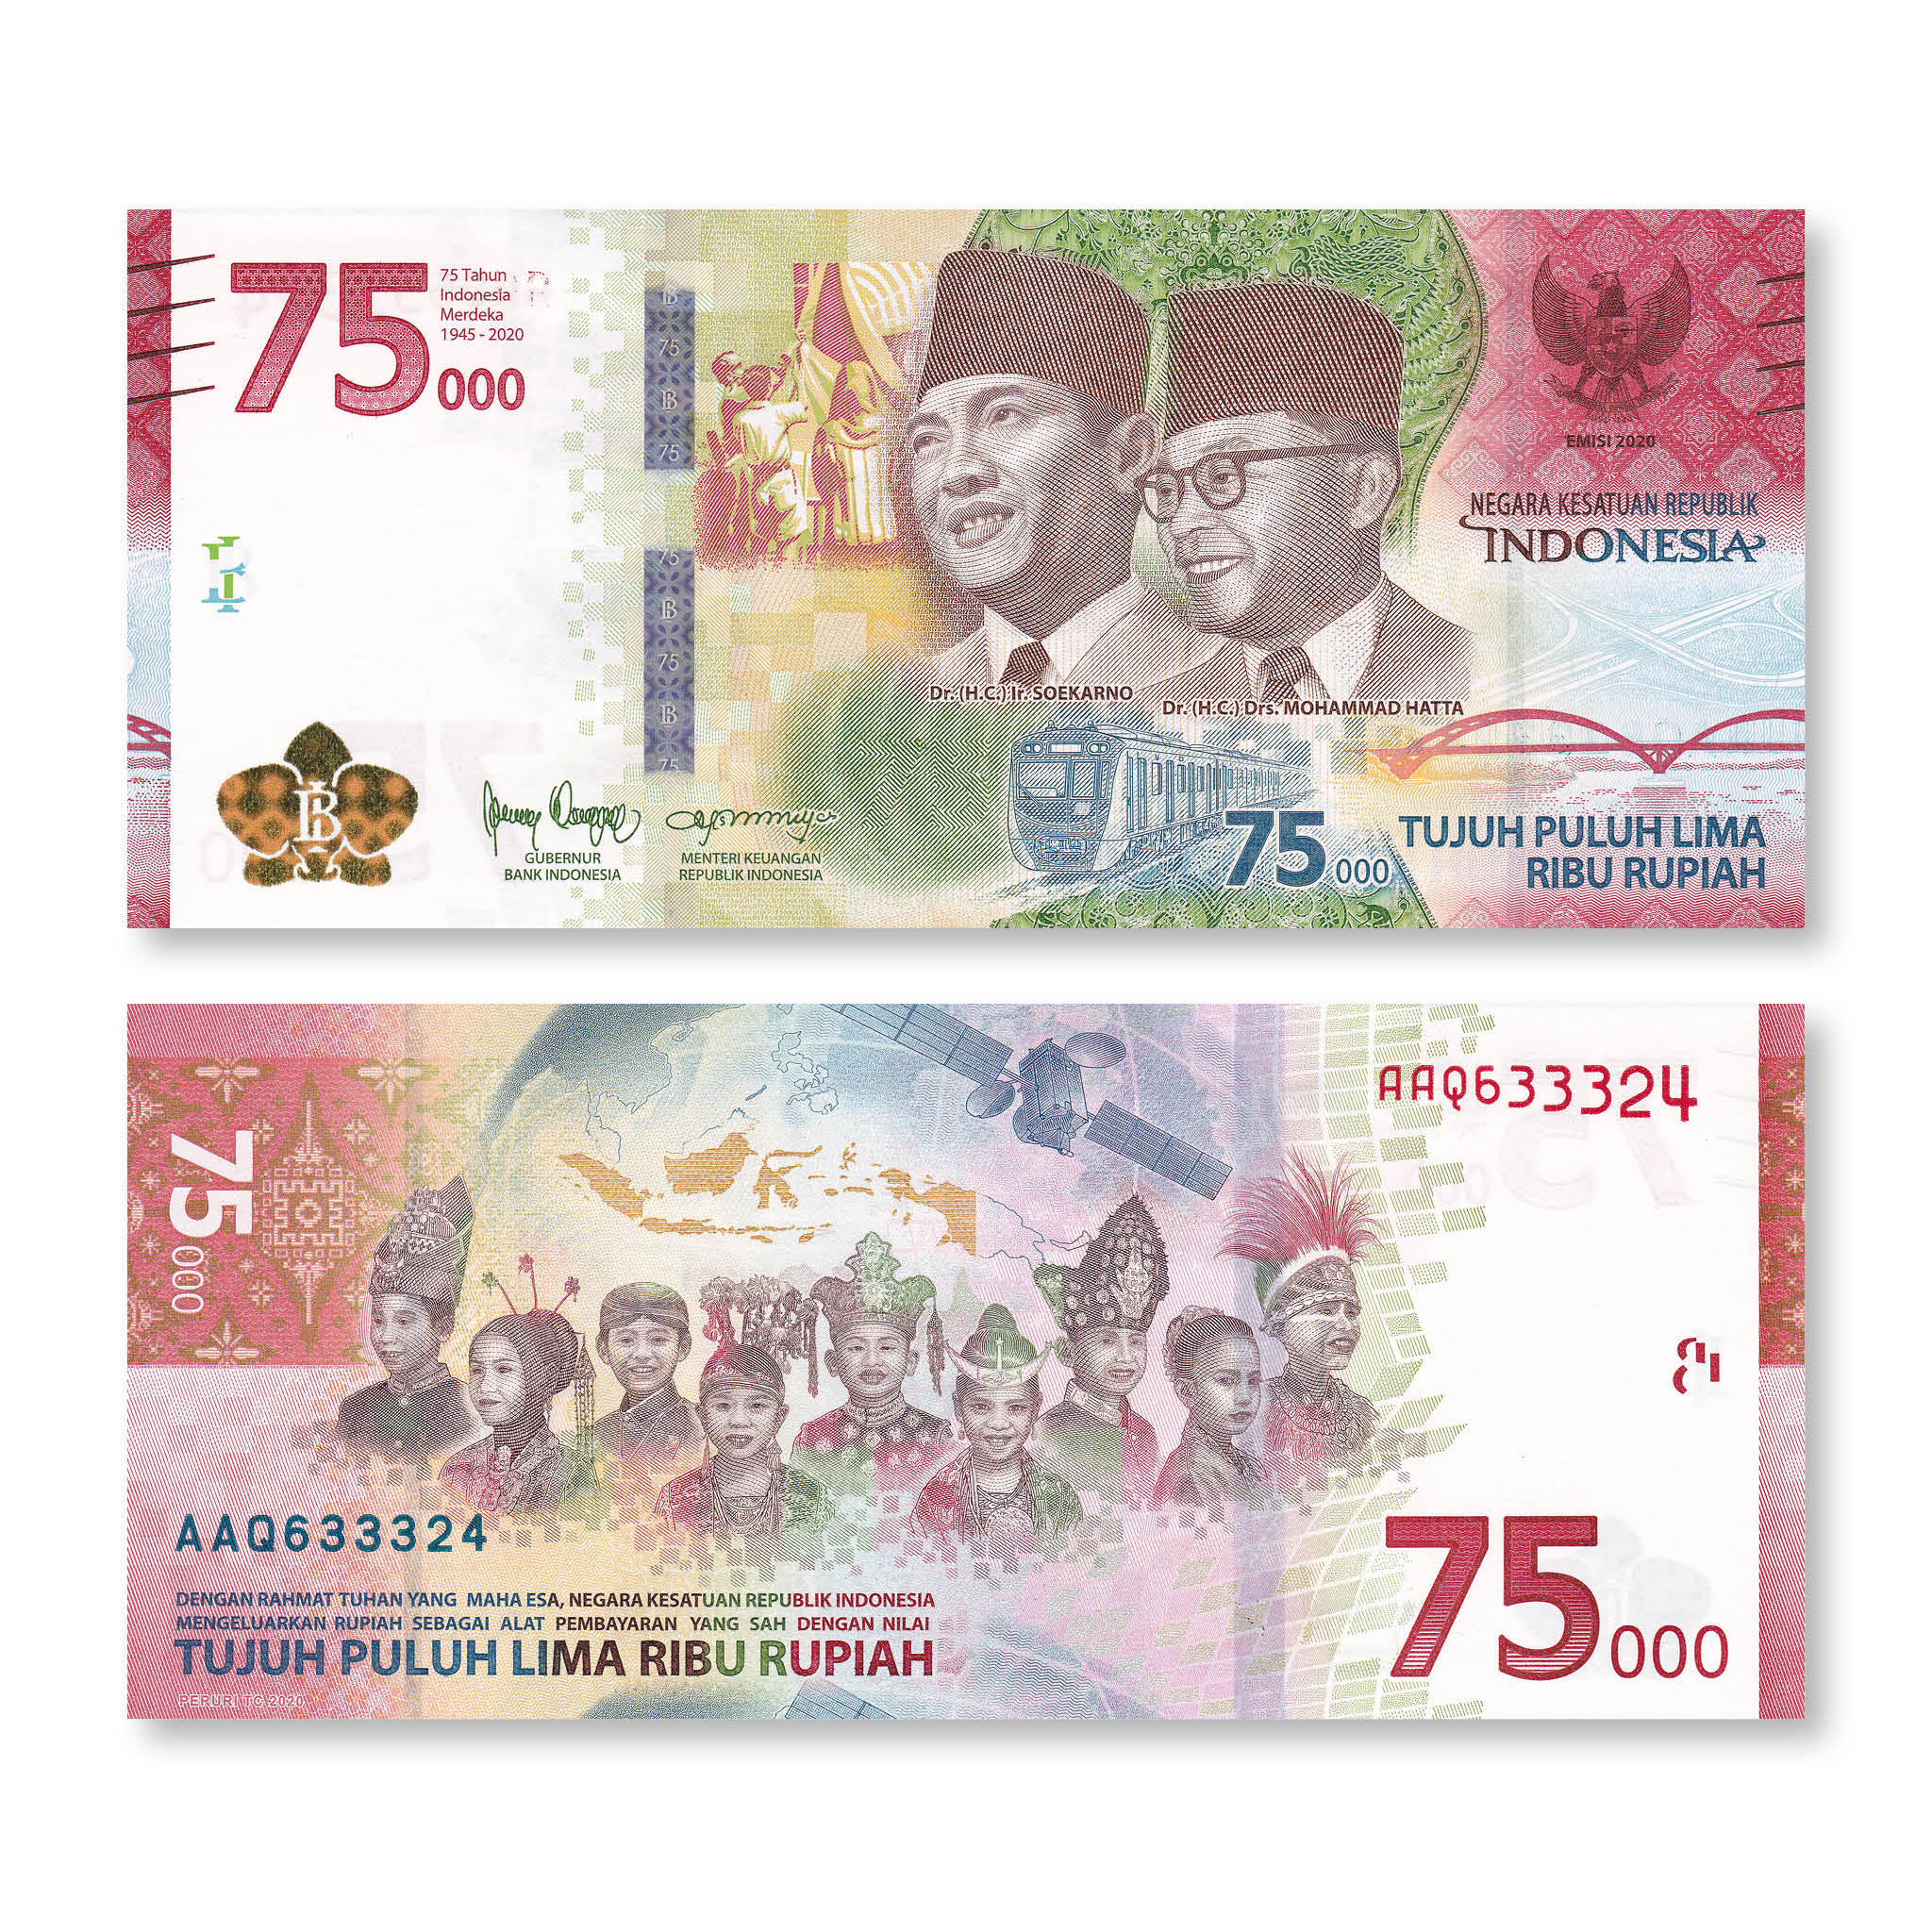 Indonesia 75000 Rupiah, 2020 Commemorative, B616a, UNC - Robert's World Money - World Banknotes